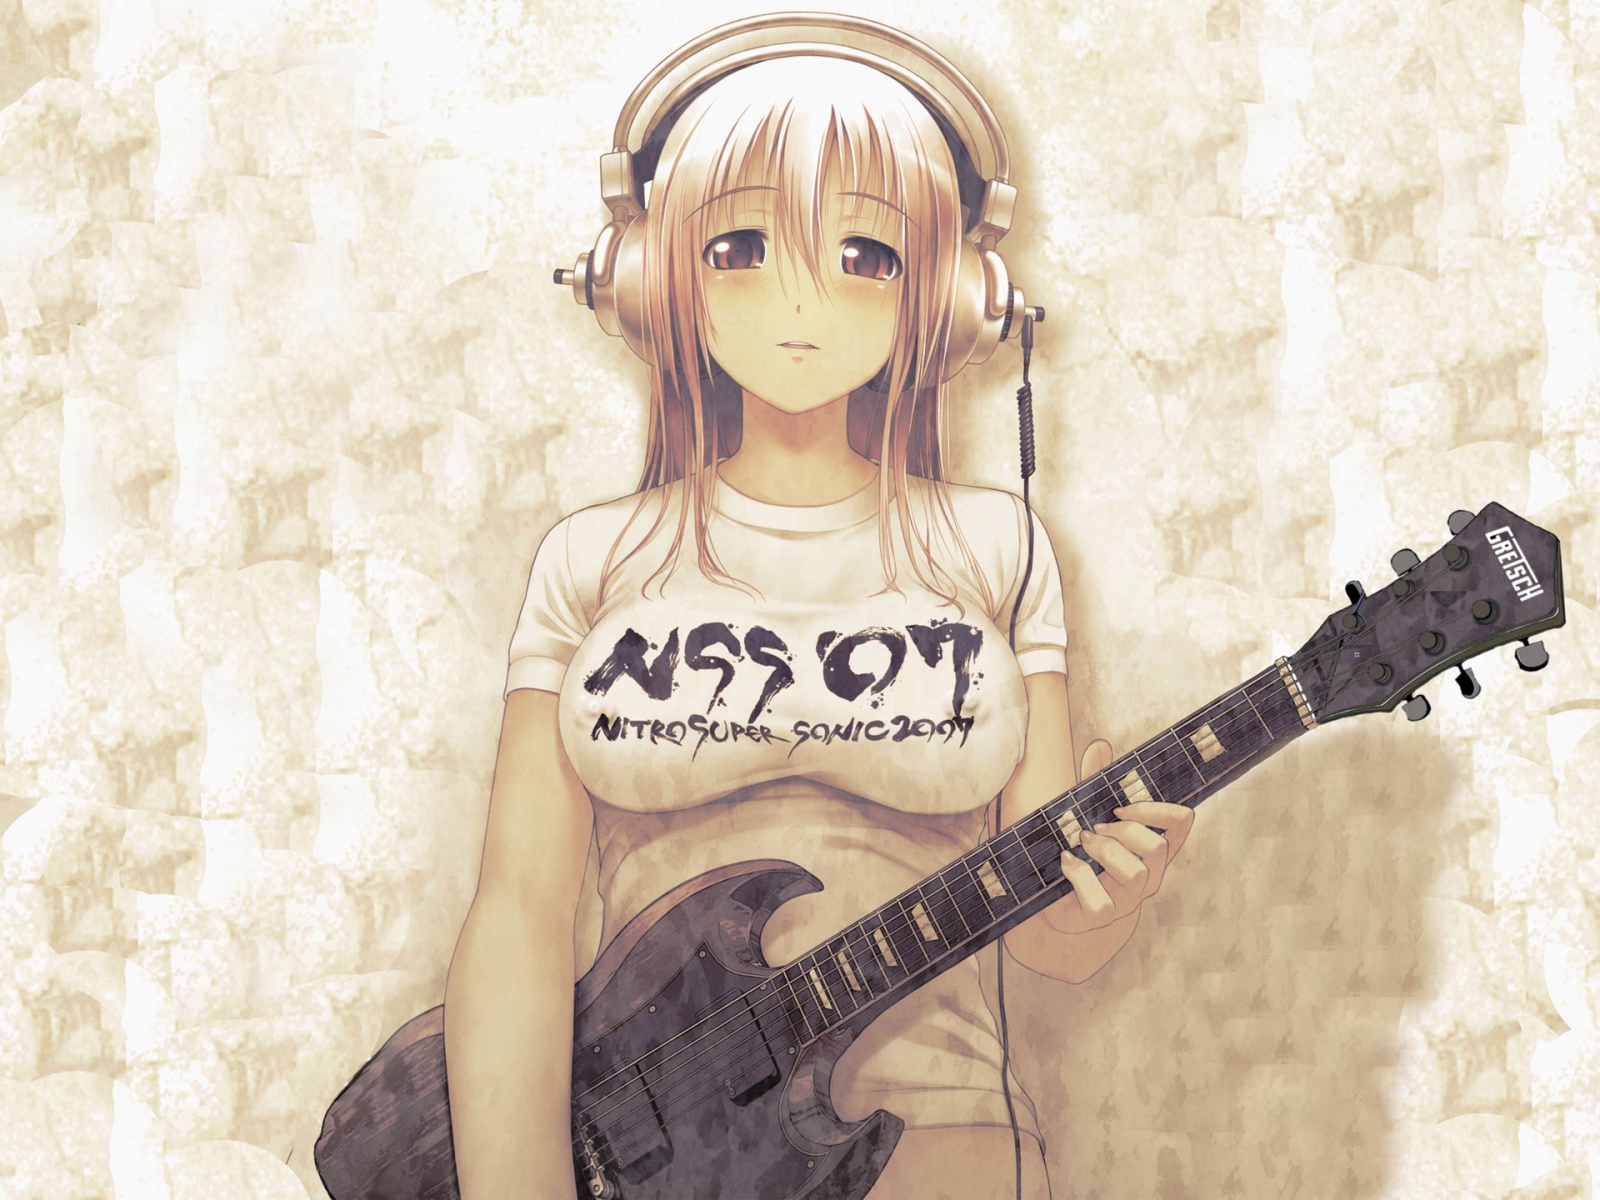 http://2.bp.blogspot.com/_Ym3du2sG3R4/TH6YAkafQSI/AAAAAAAACyg/I3-IdTEz5Ig/s1600/Anime-Girl-with-Guitar-wallpaper_13733.jpg